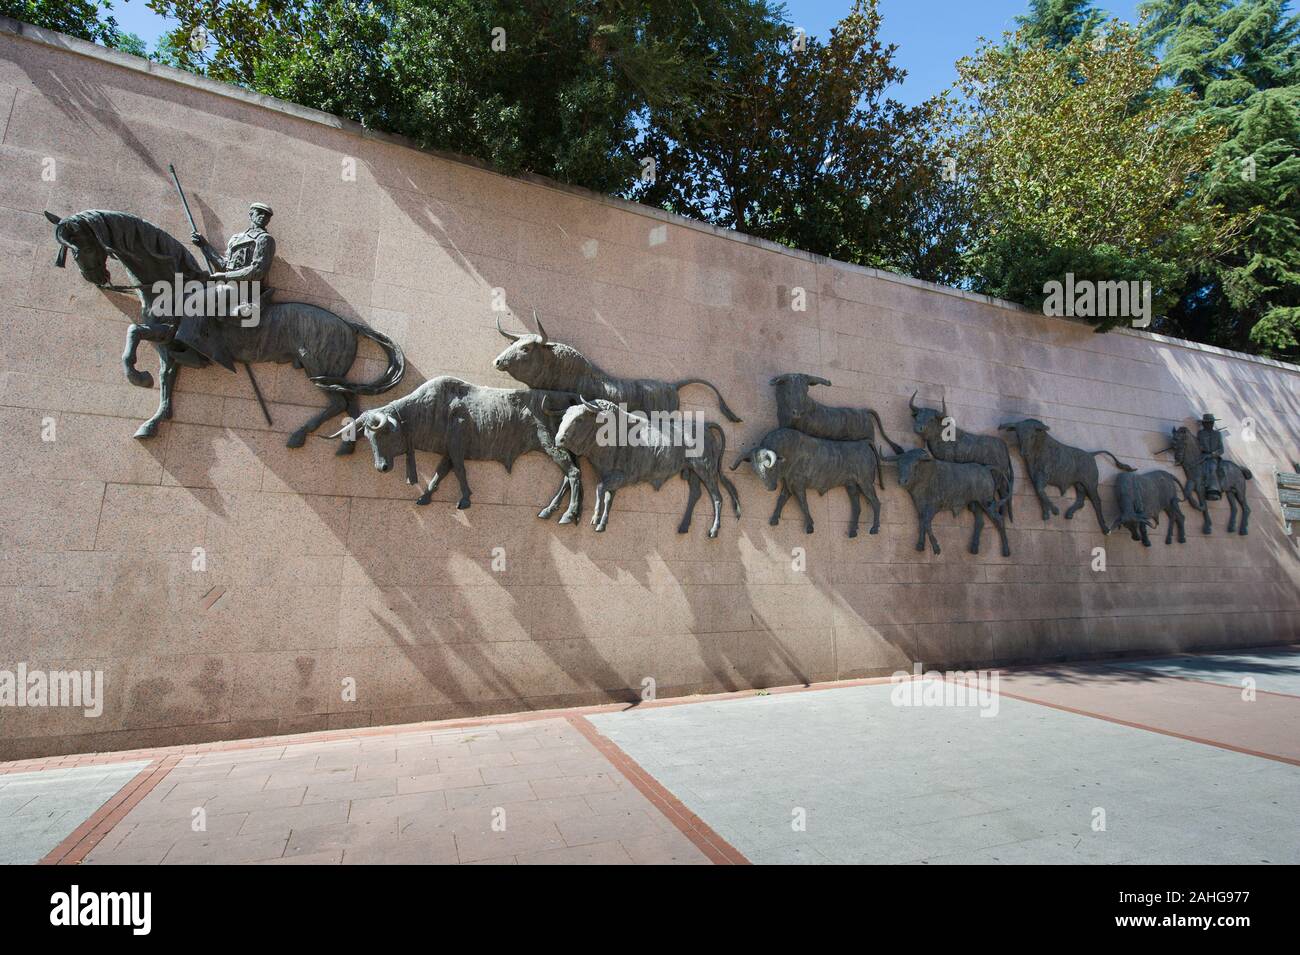 Bulls sculpture on wall at Plaza de Toros, Madrid, Spain Stock Photo